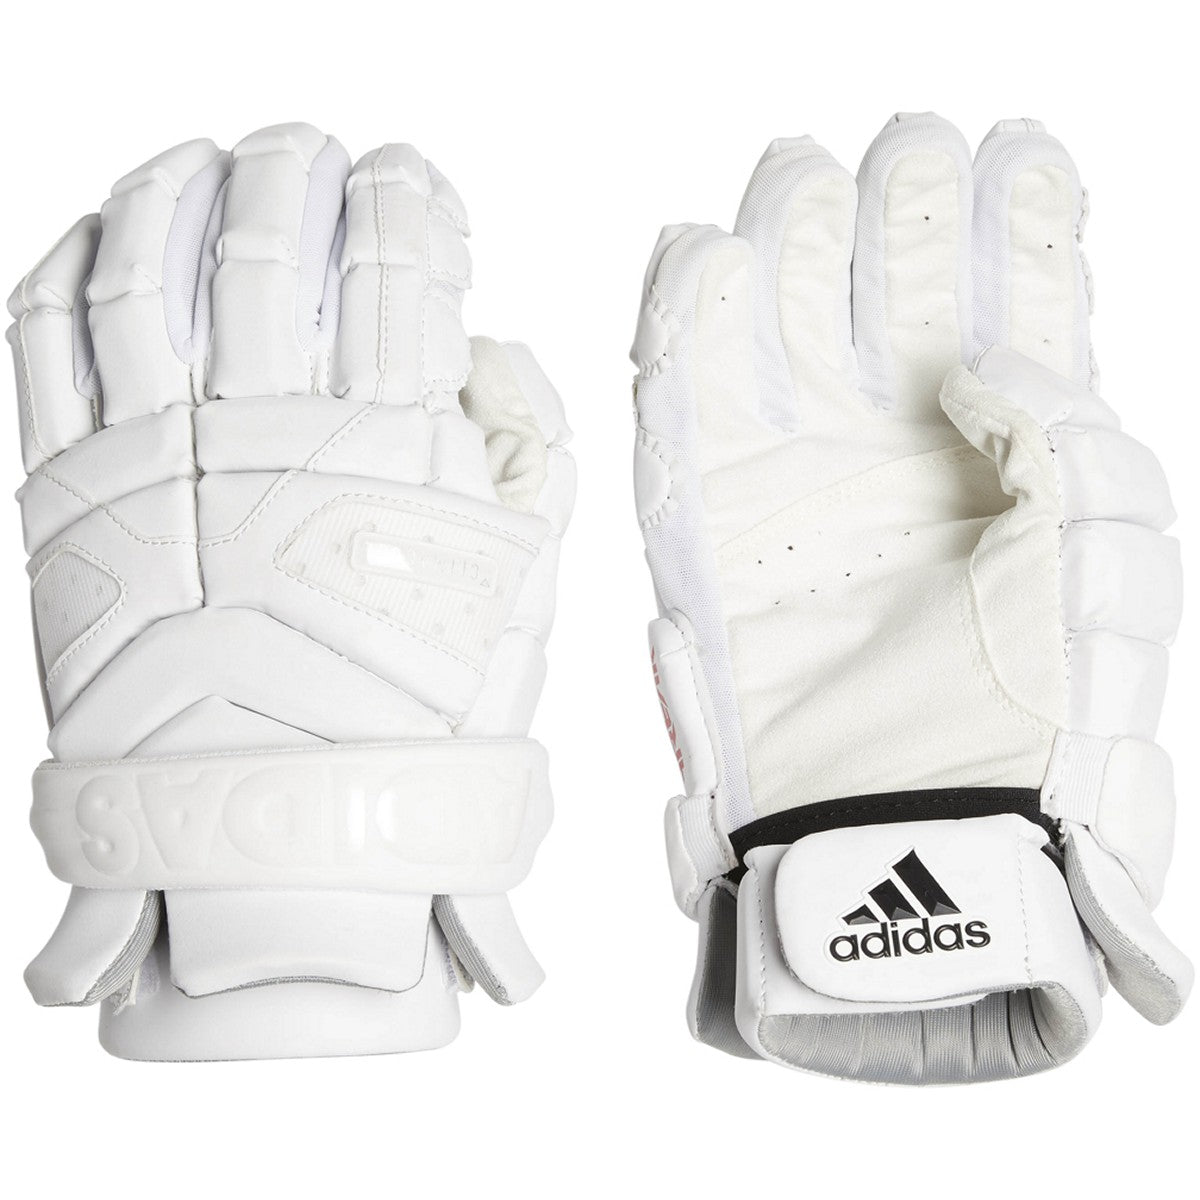 adidas Freak Lax Lacrosse Gloves 